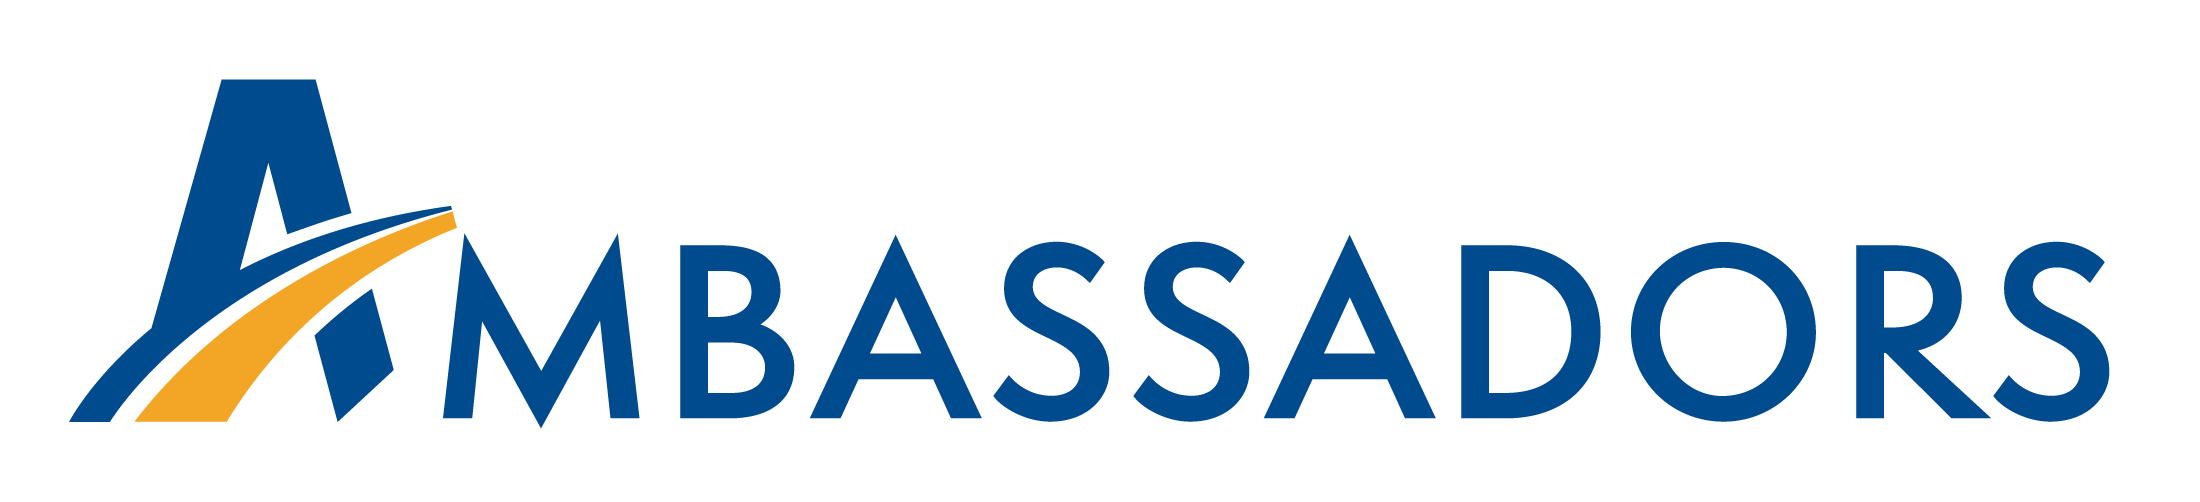 Ascension Chamber Ambassadors Logo